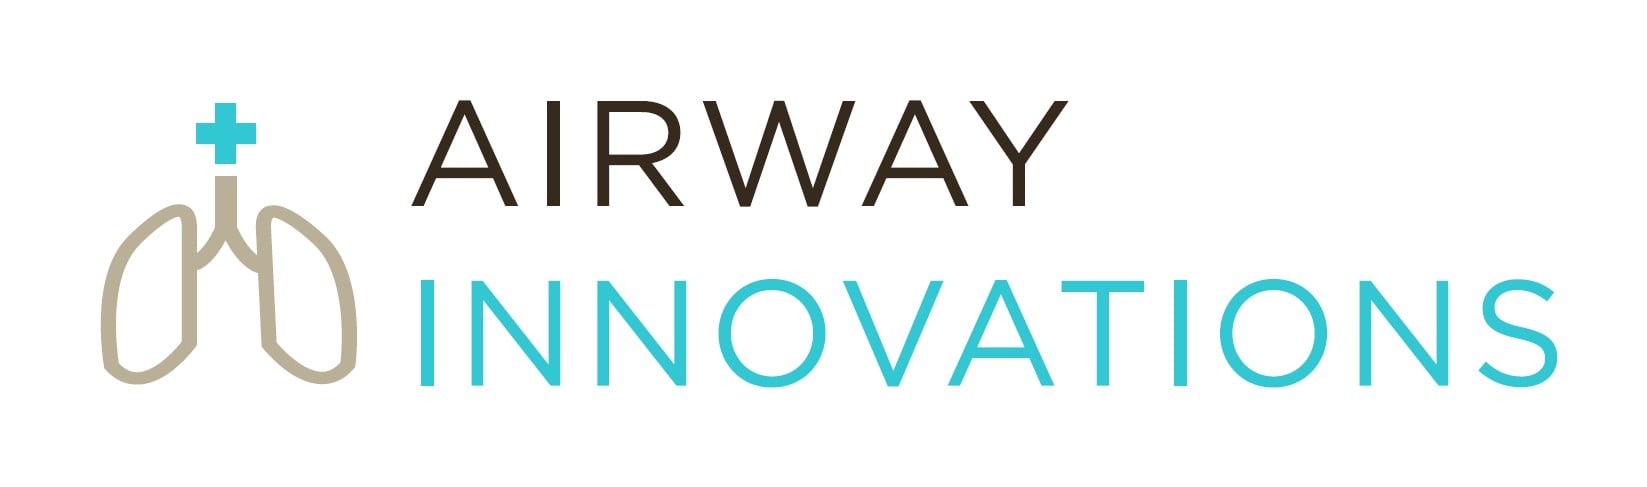 grand-rapids-startups-airway-innovations-hiring